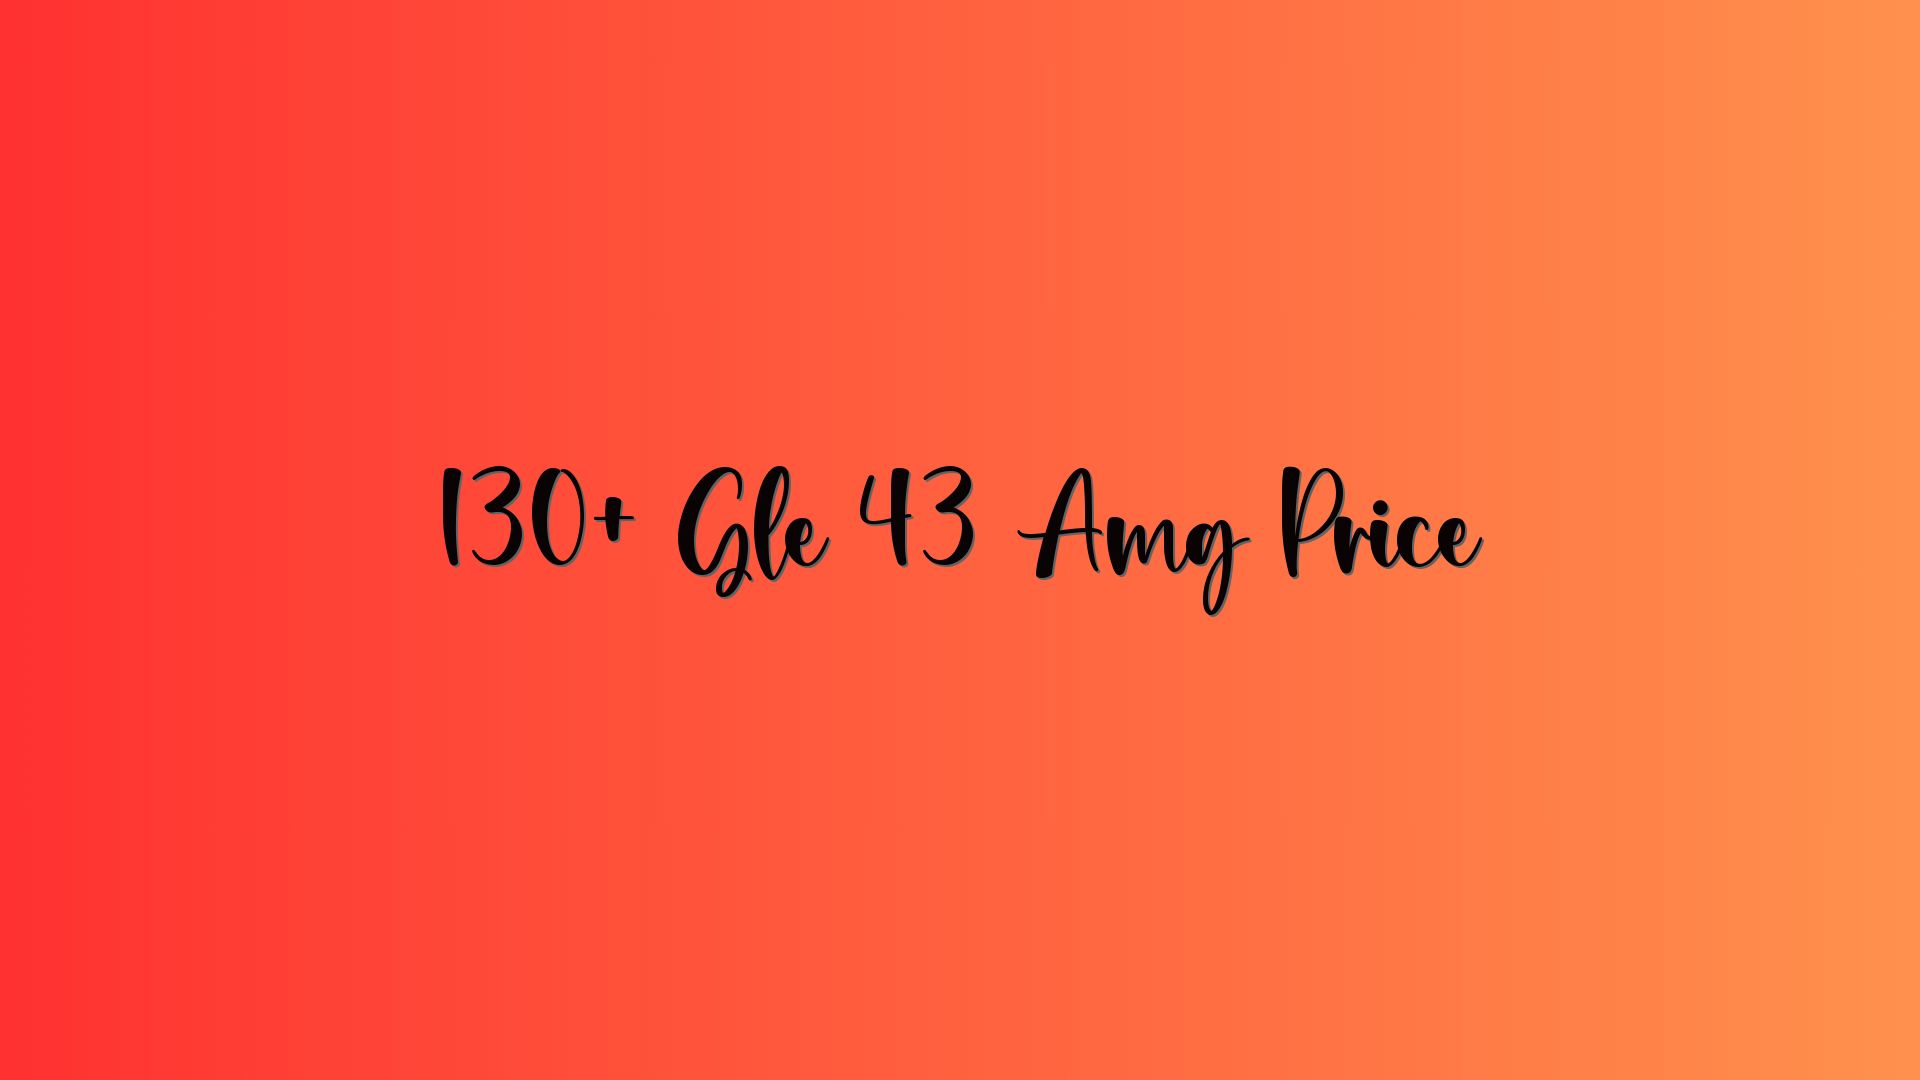 130+ Gle 43 Amg Price